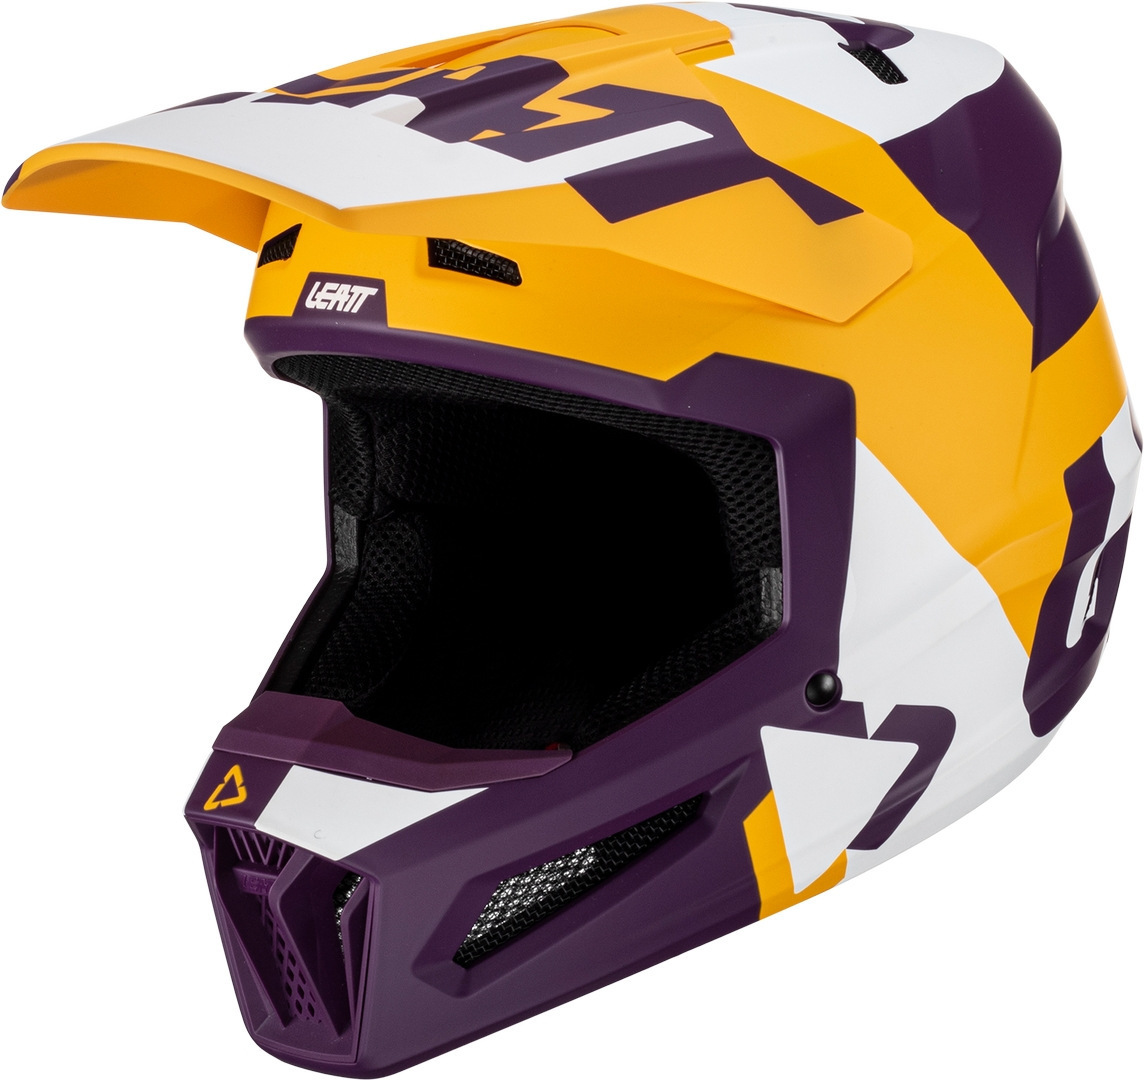 Leatt 2.5 Tricolor Motocross Helm, lila-gelb, Größe M